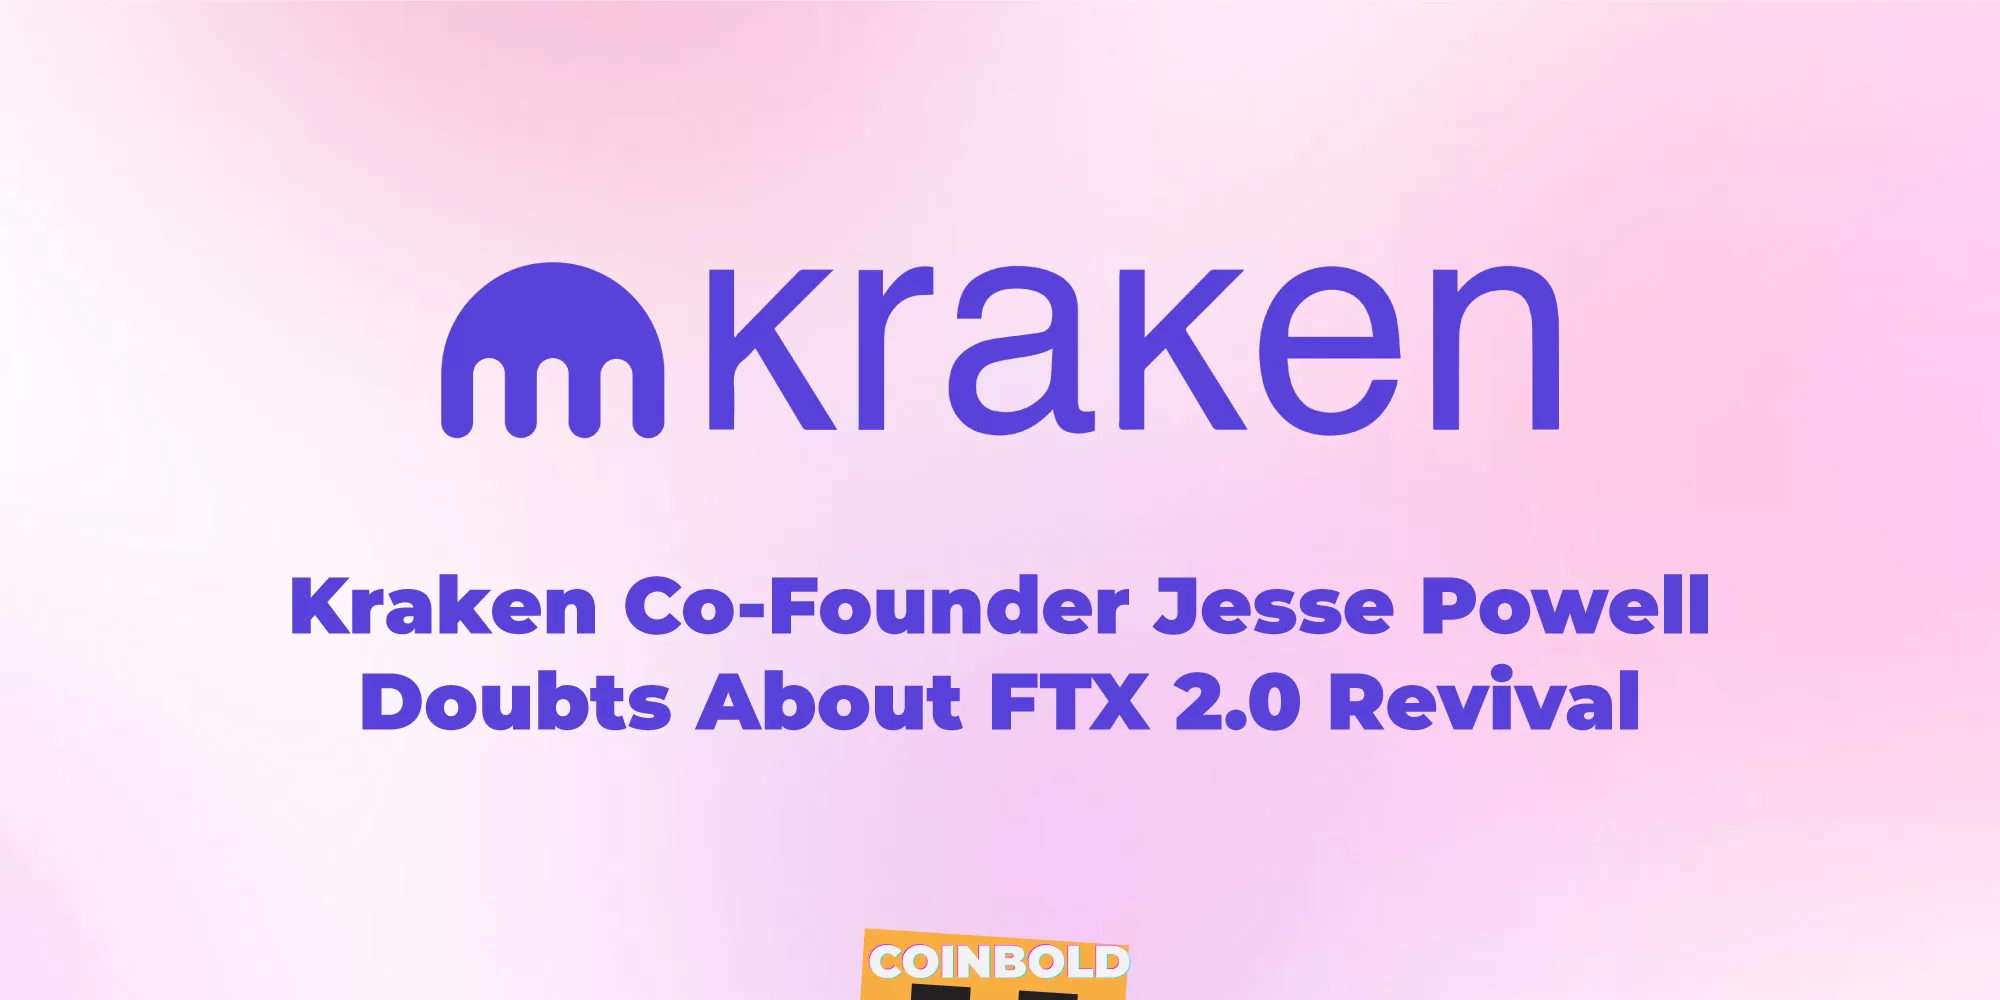 Kraken Co-Founder Jesse Powell Doubts About FTX 2.0 Revival